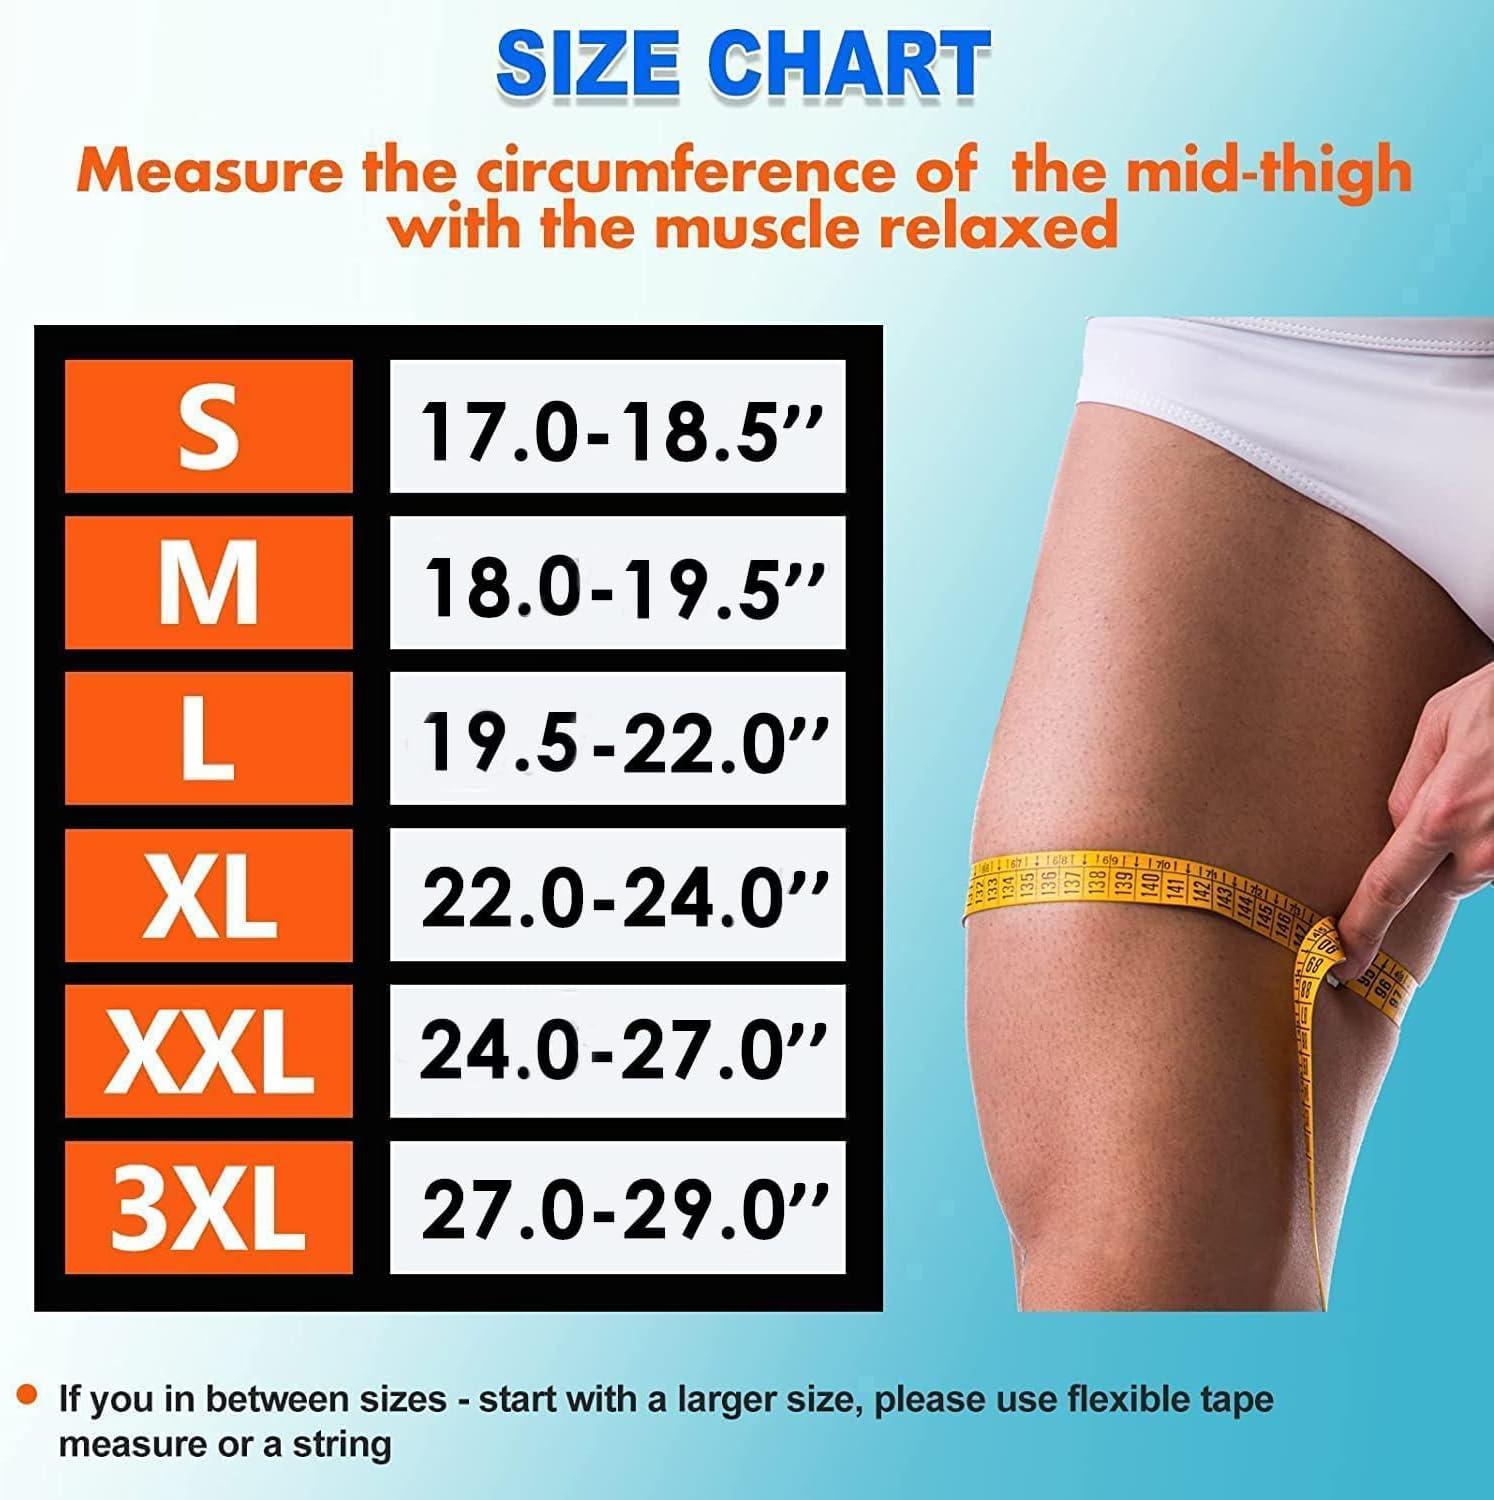 Thigh Compression Sleeve - Hamstring (Pair) Thigh Brace & Wrap Anti Slip  Sleeves